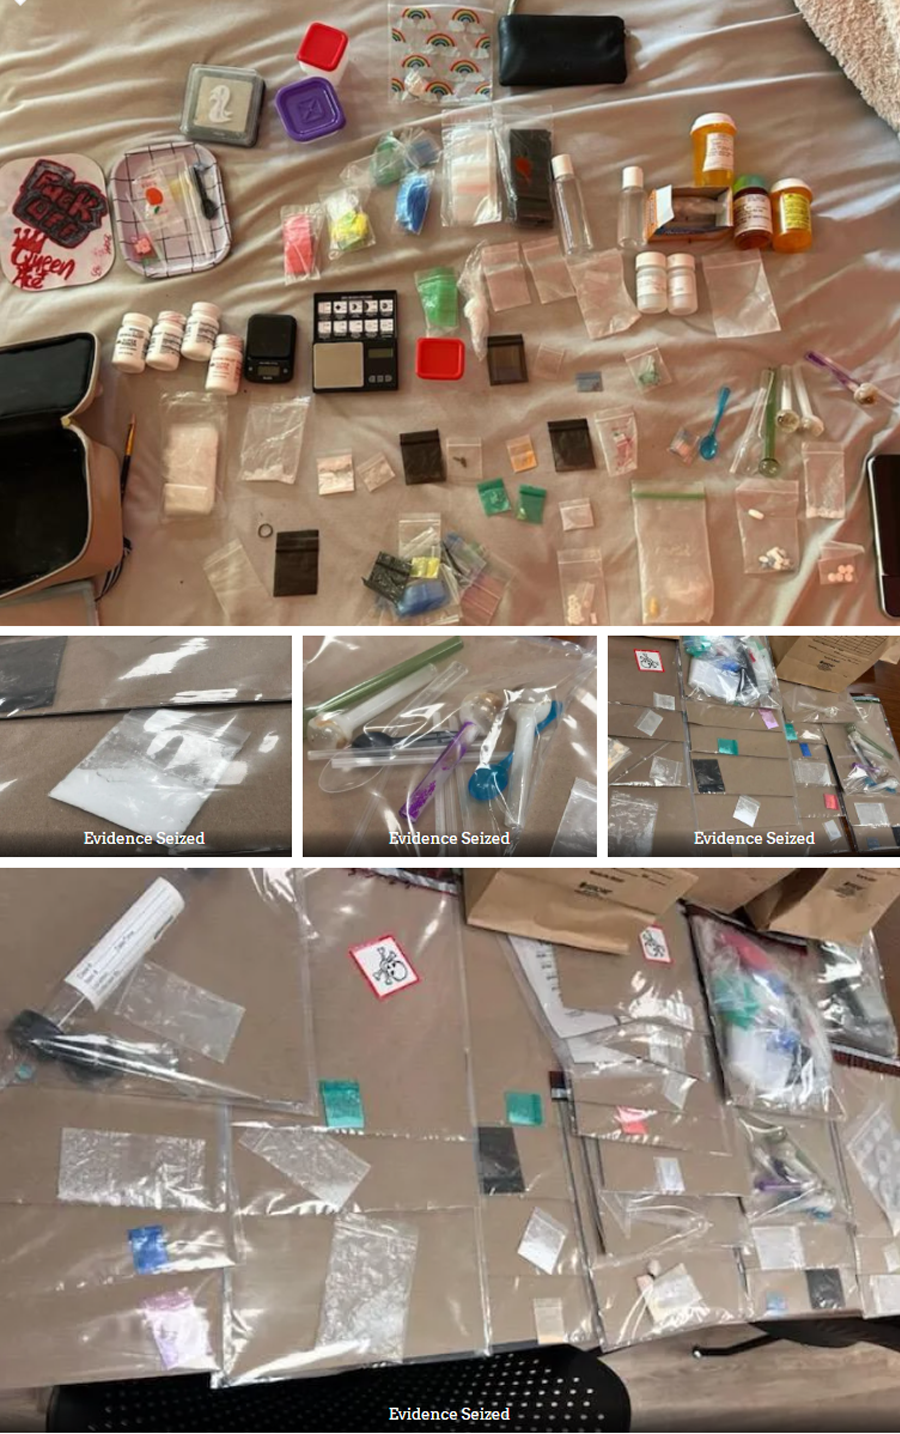 Detectives discovered Fentanyl, Methamphetamine, Heroin, Oxycontin, Alprazolam, Buprenorphine, Morphine, MDMA, Liquid Methadone, Marijuana and Pipes.